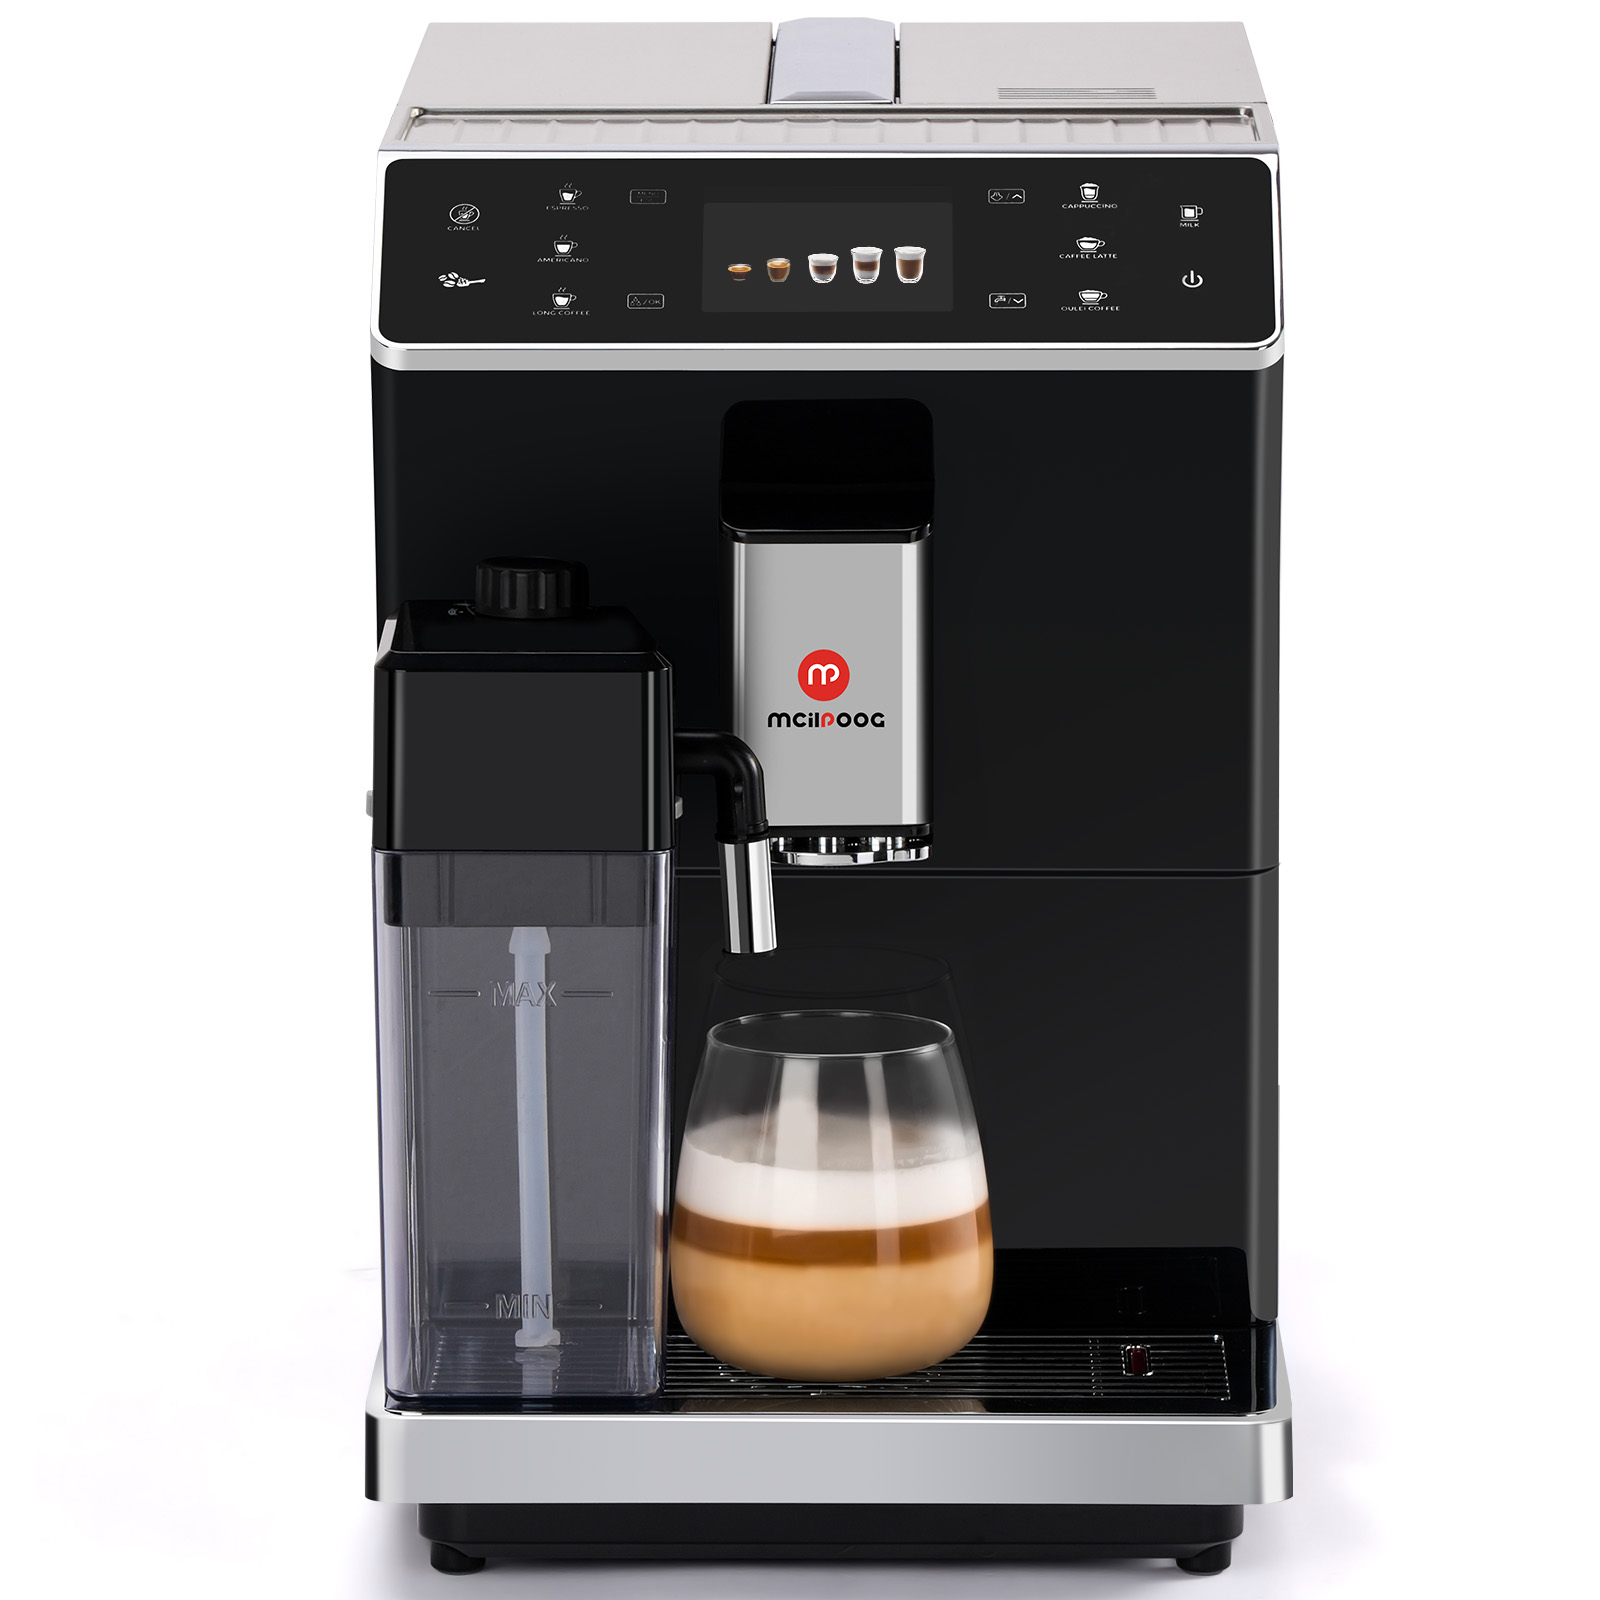 Mcilpoog ws-202 Super Automatic Espresso Coffee Machine,Fully Automatic ...